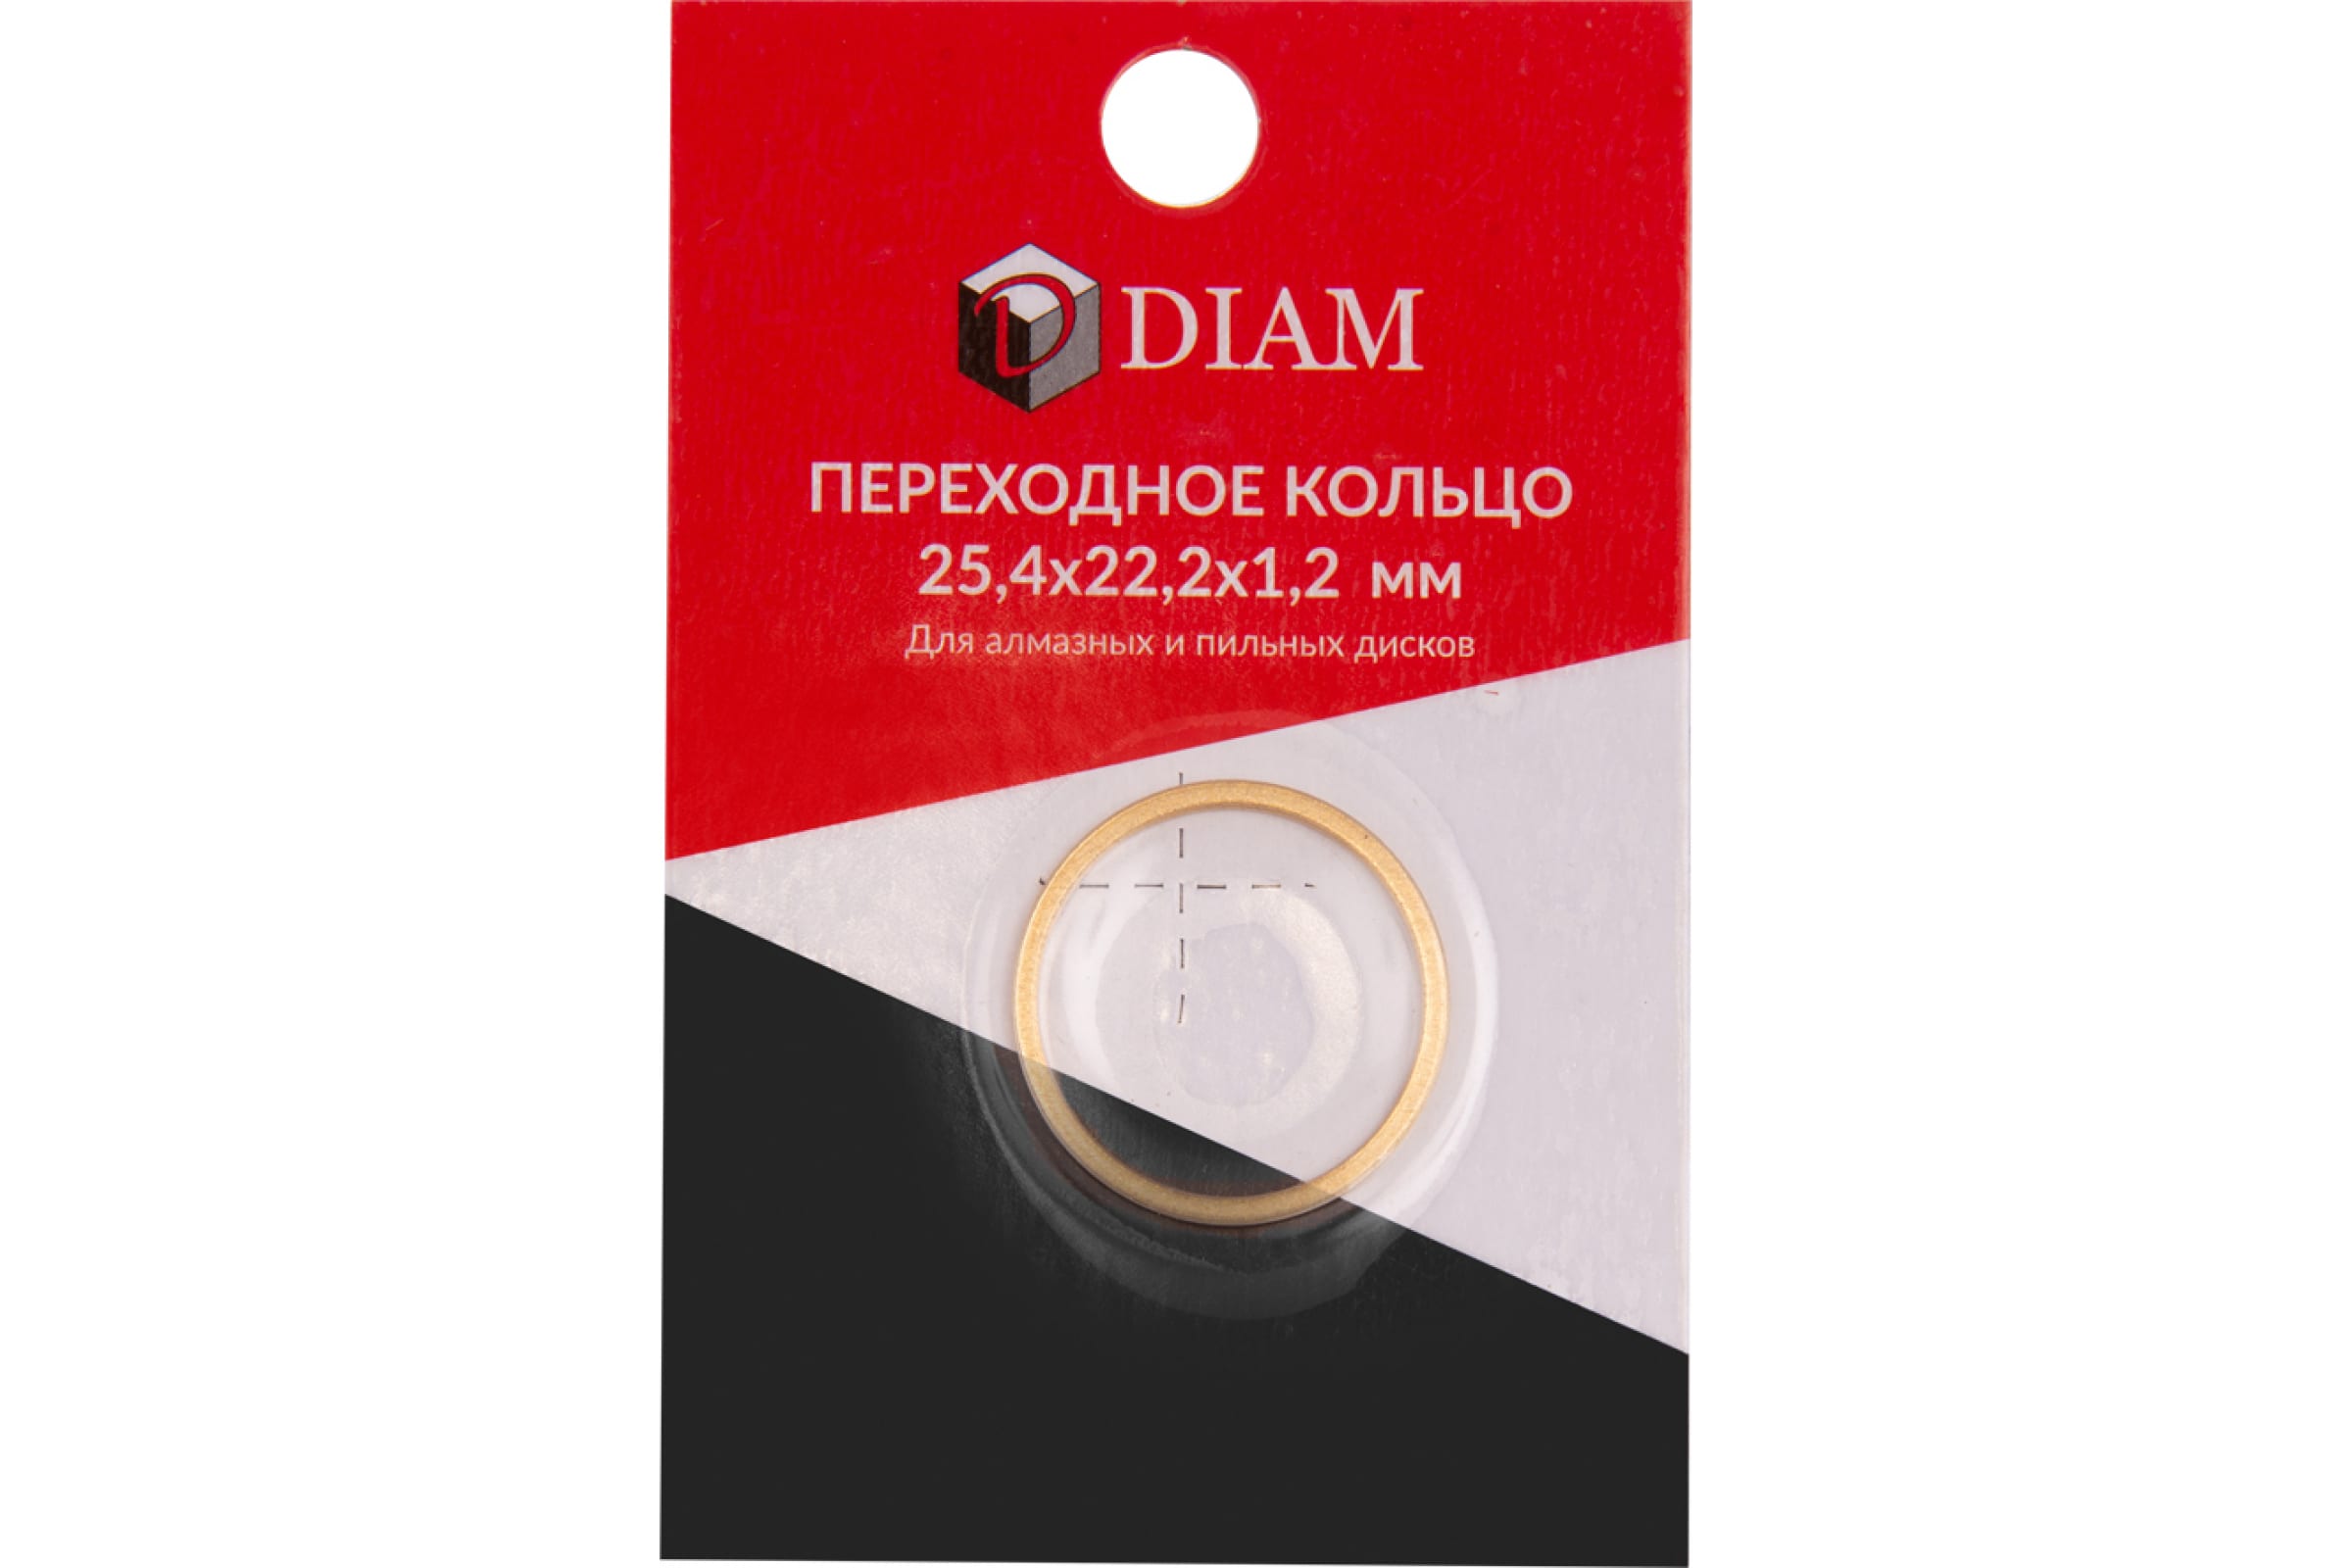 DIAM Переходное кольцо 25,4х22,2х1,2 640084 переходное кольцо trio diamond